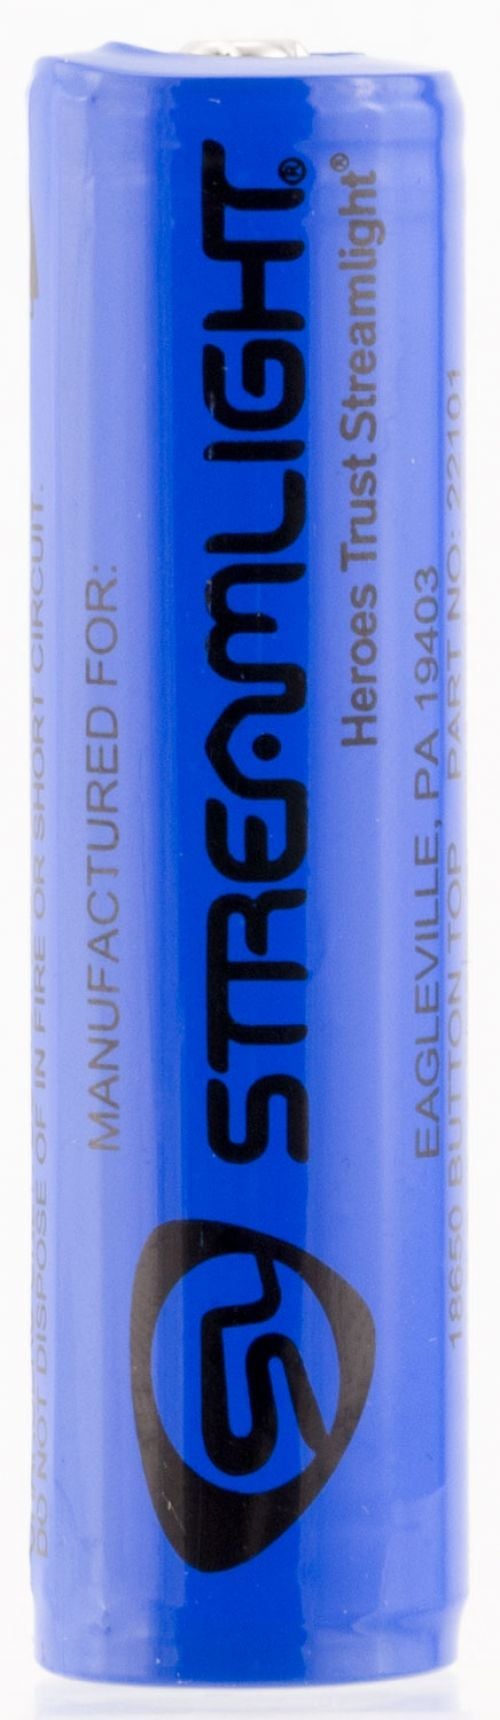 Streamlight 18650 Battery Rechargeable Li-ion